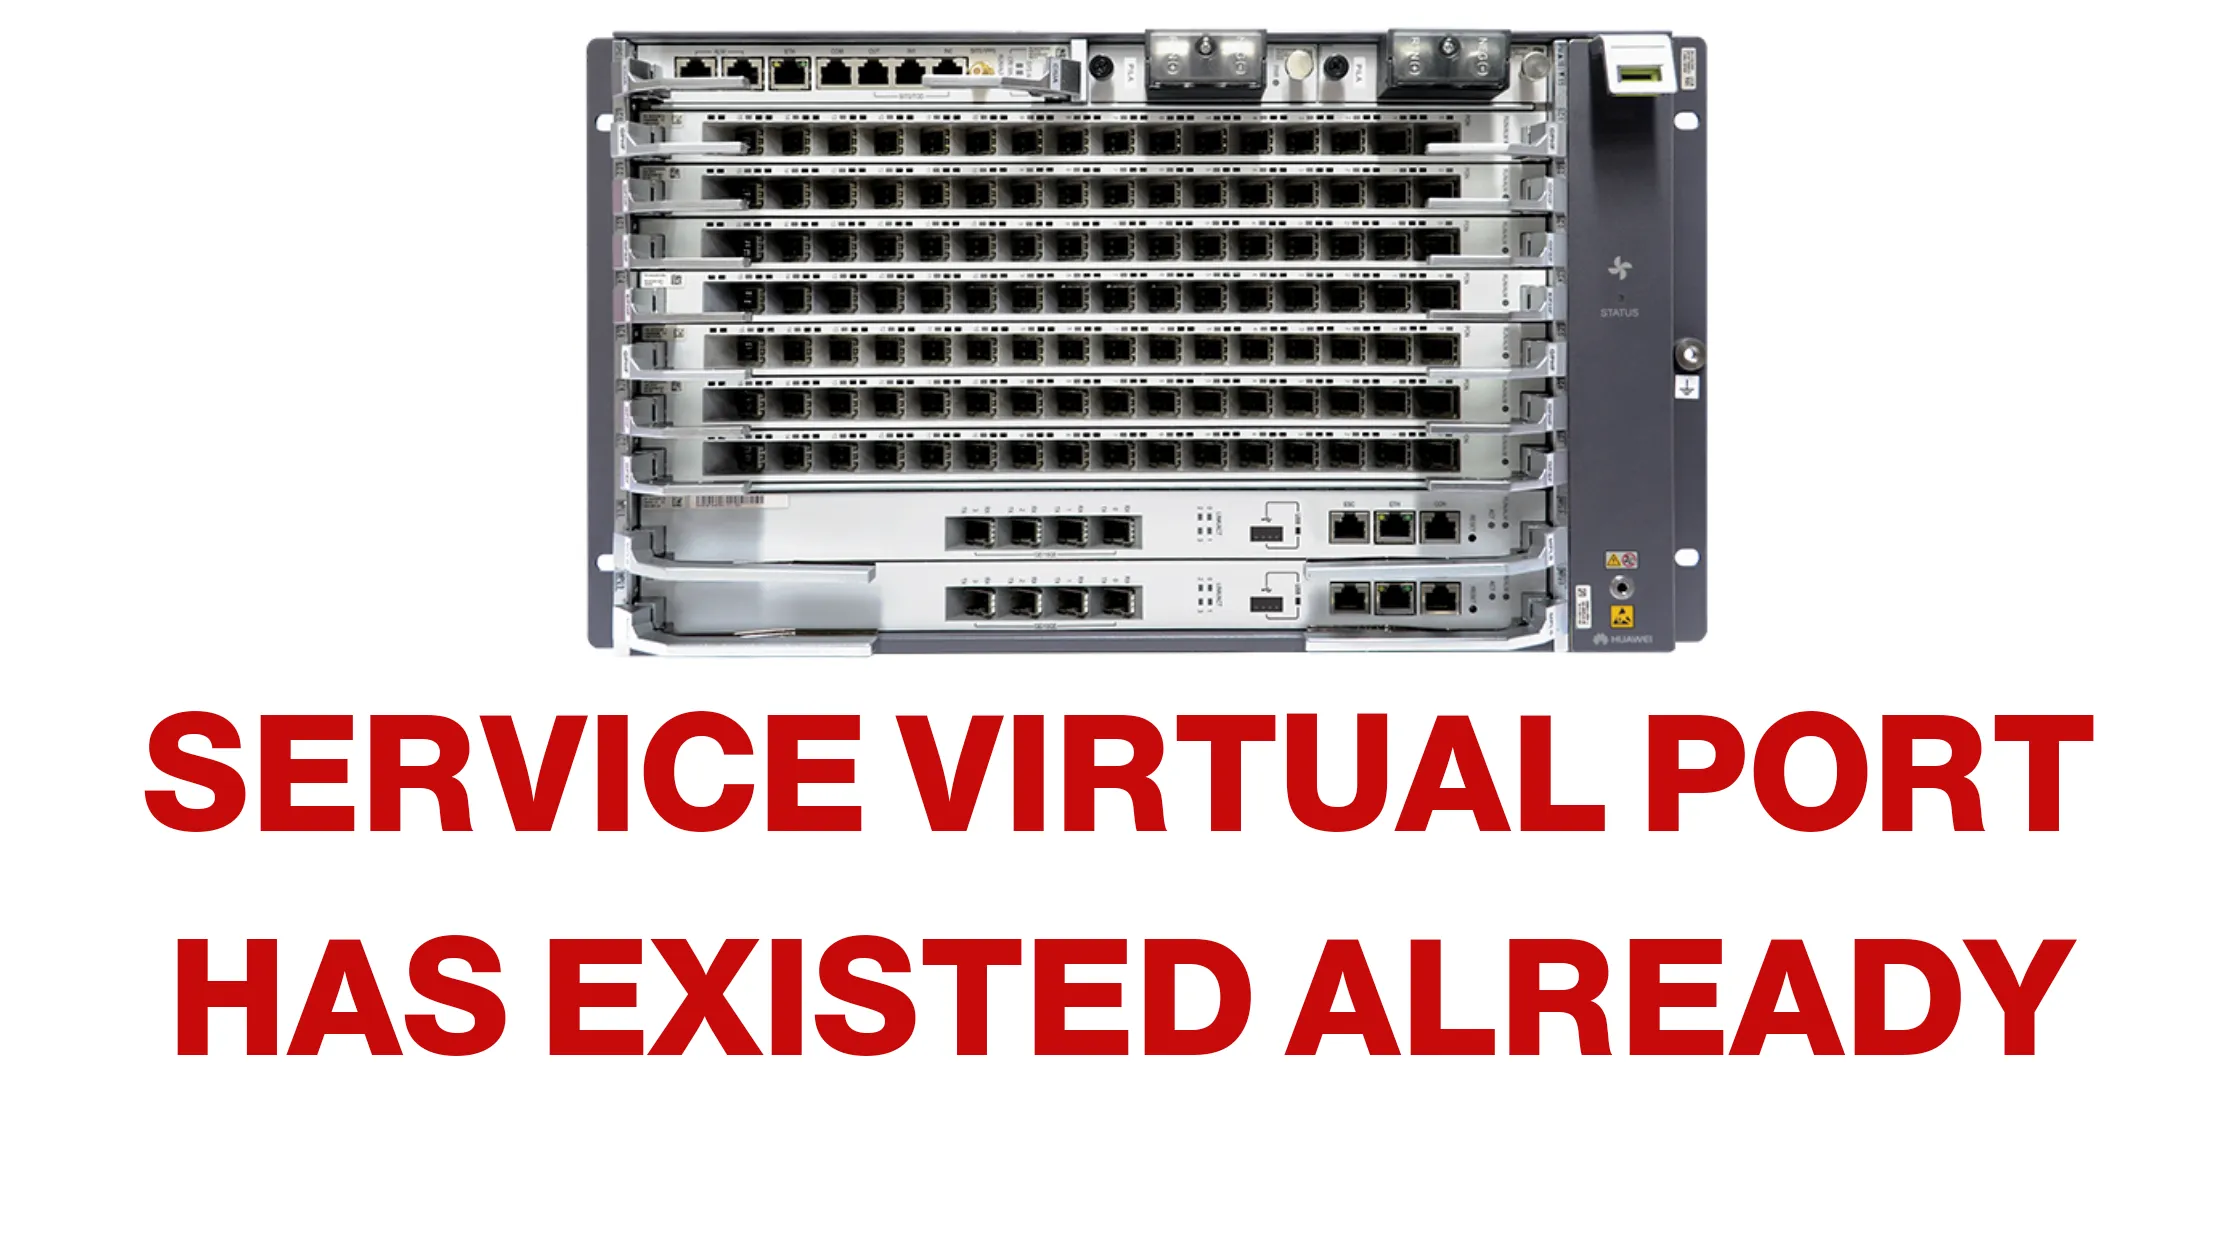 Service virtual port